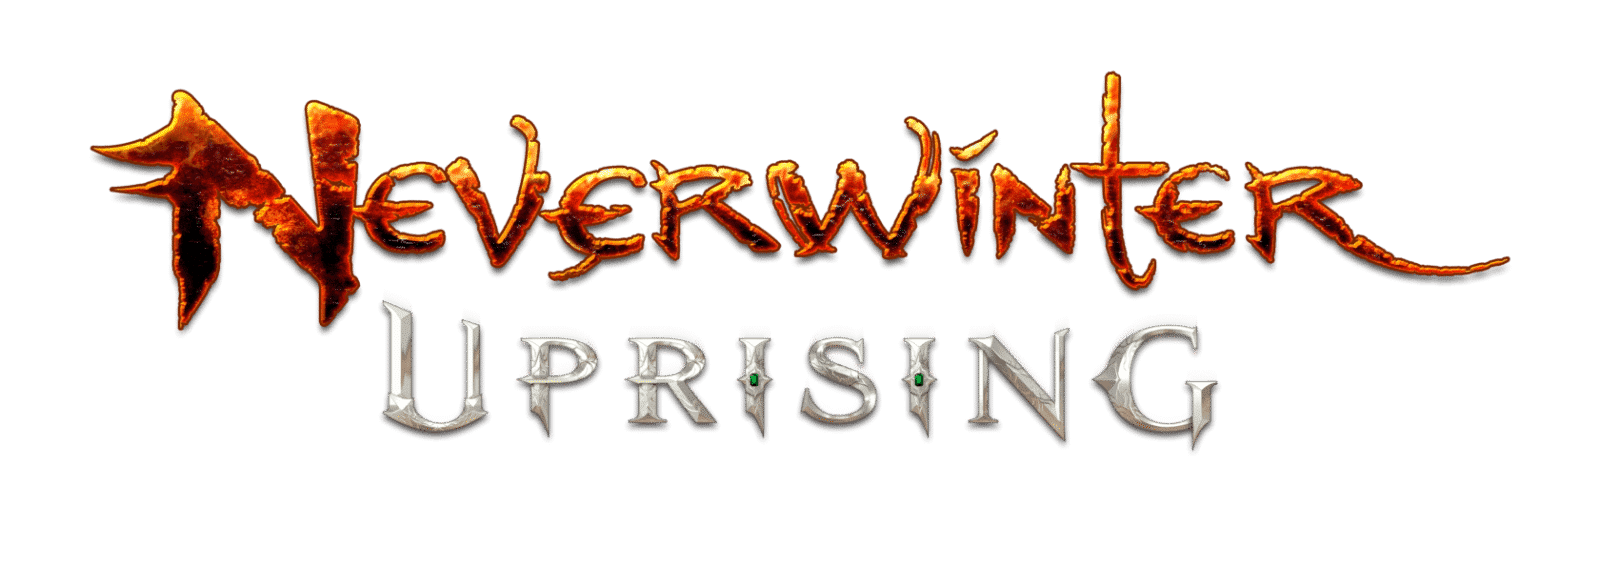 Neverwinter Uprising Logo